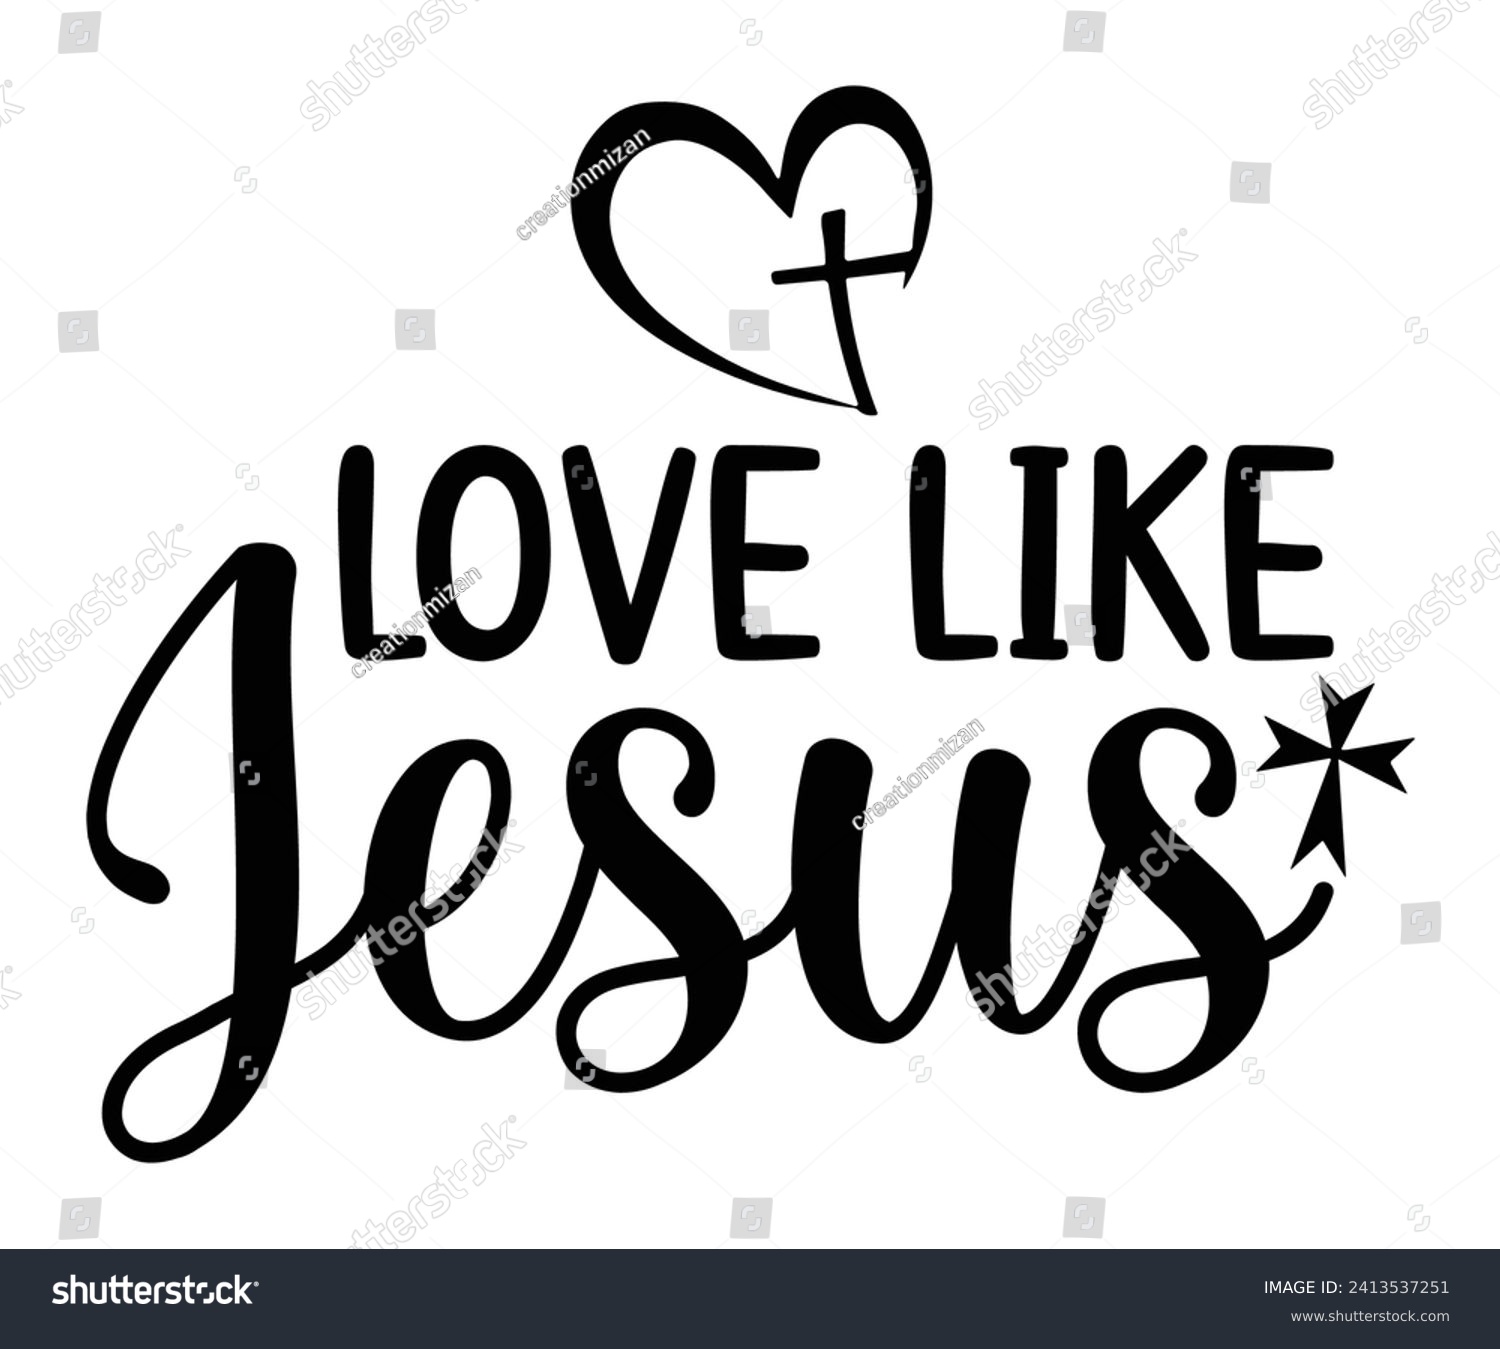 SVG of love like jesus Svg,Christian,Love Like Jesus, XOXO, True Story,Religious Easter,Mirrored,Faith Svg,God, Blessed  svg